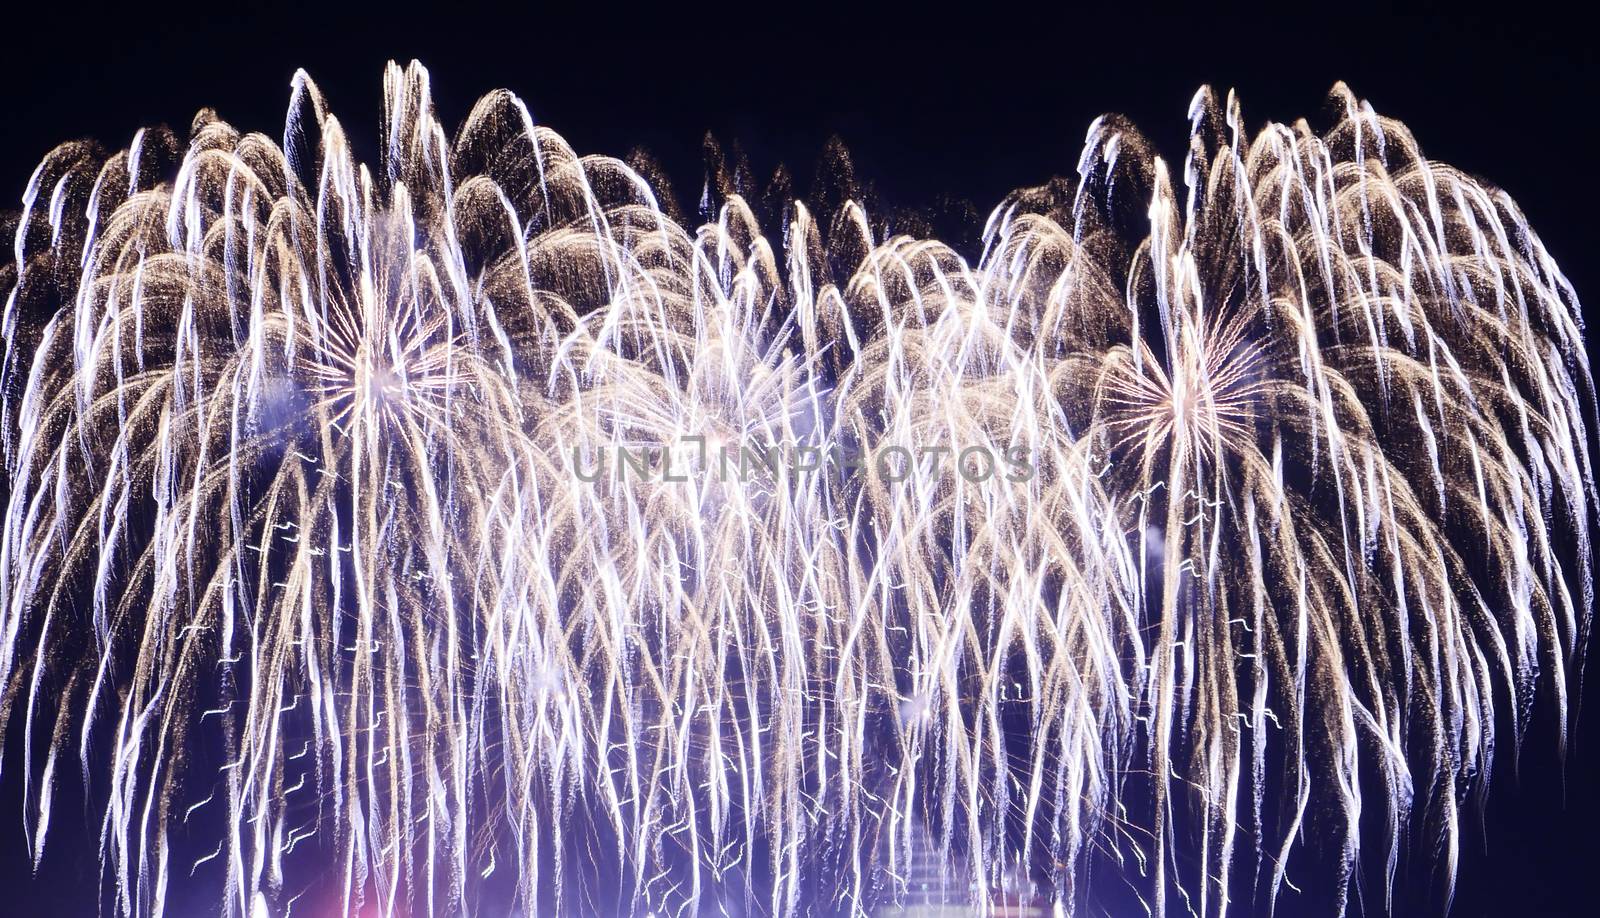 Fireworks in Big Eeuropean city Riga by dolfinvik